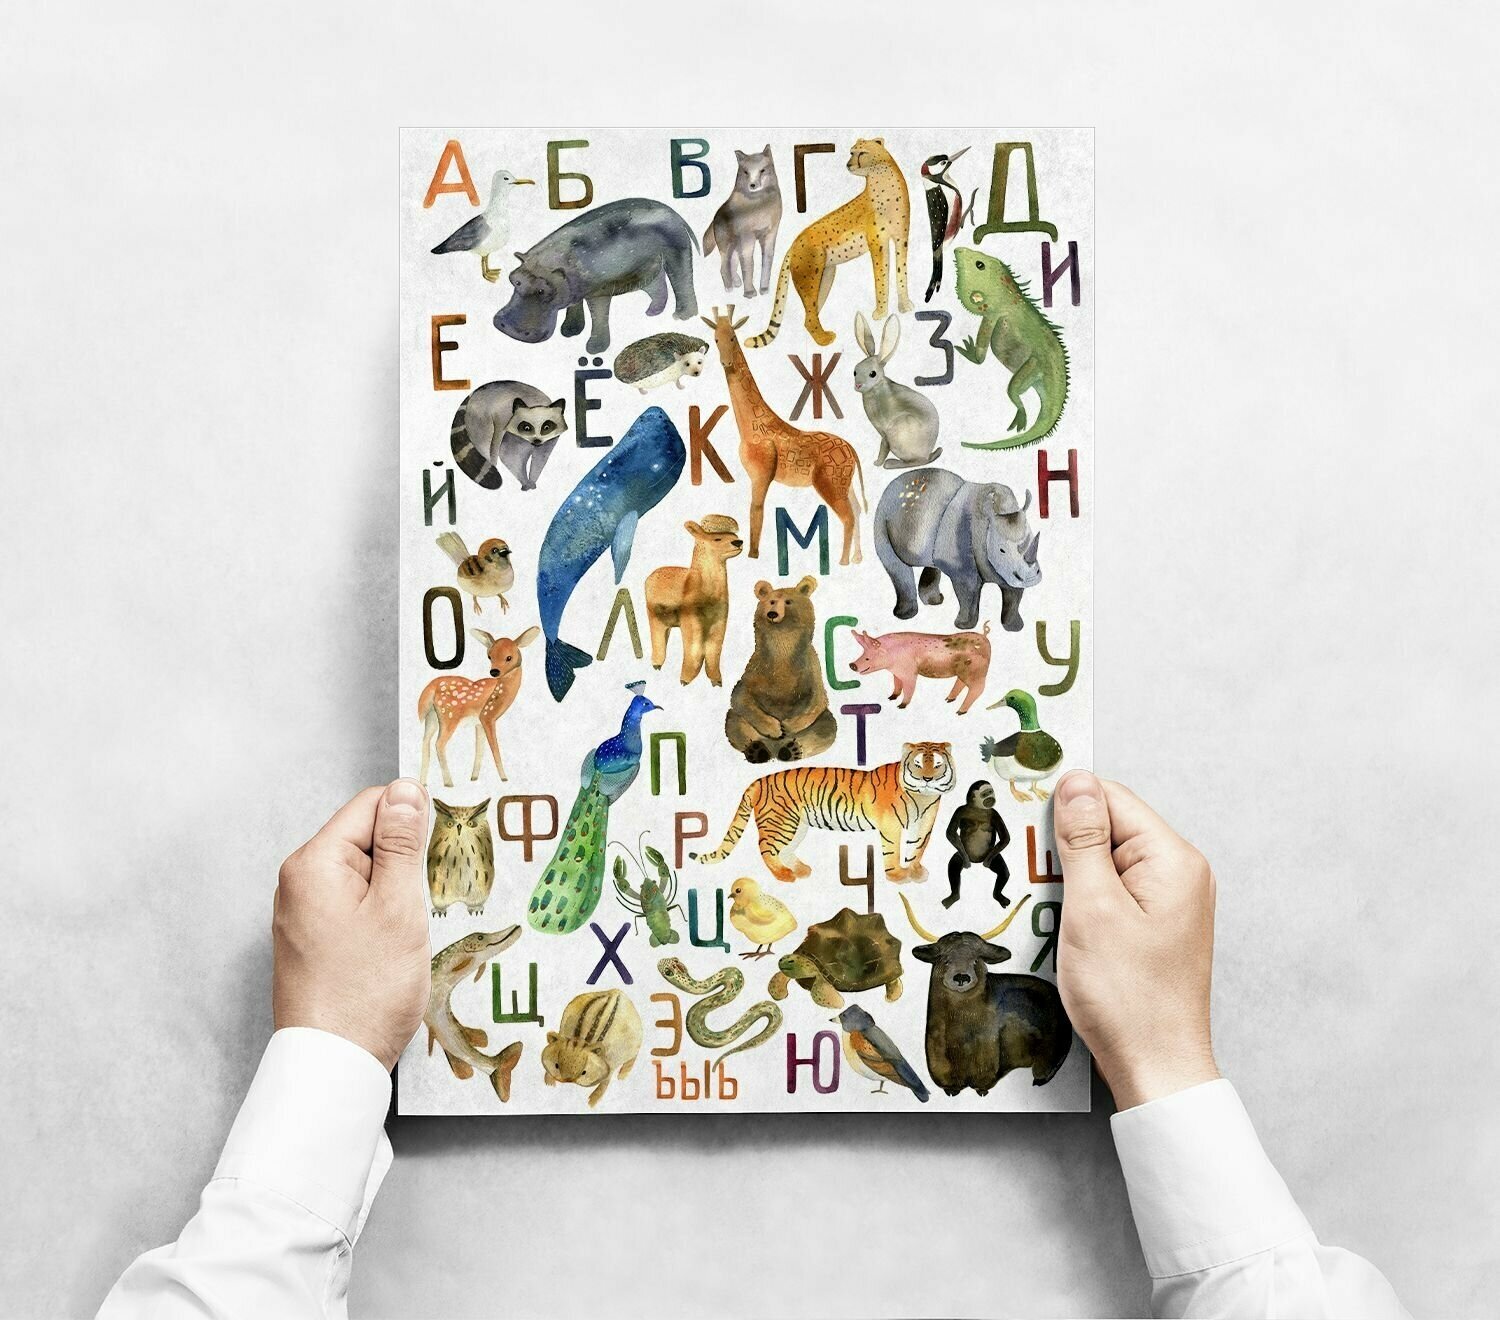 Интерьерный постер "Русский алфавит" формата А4 (21х30 см) без рамы